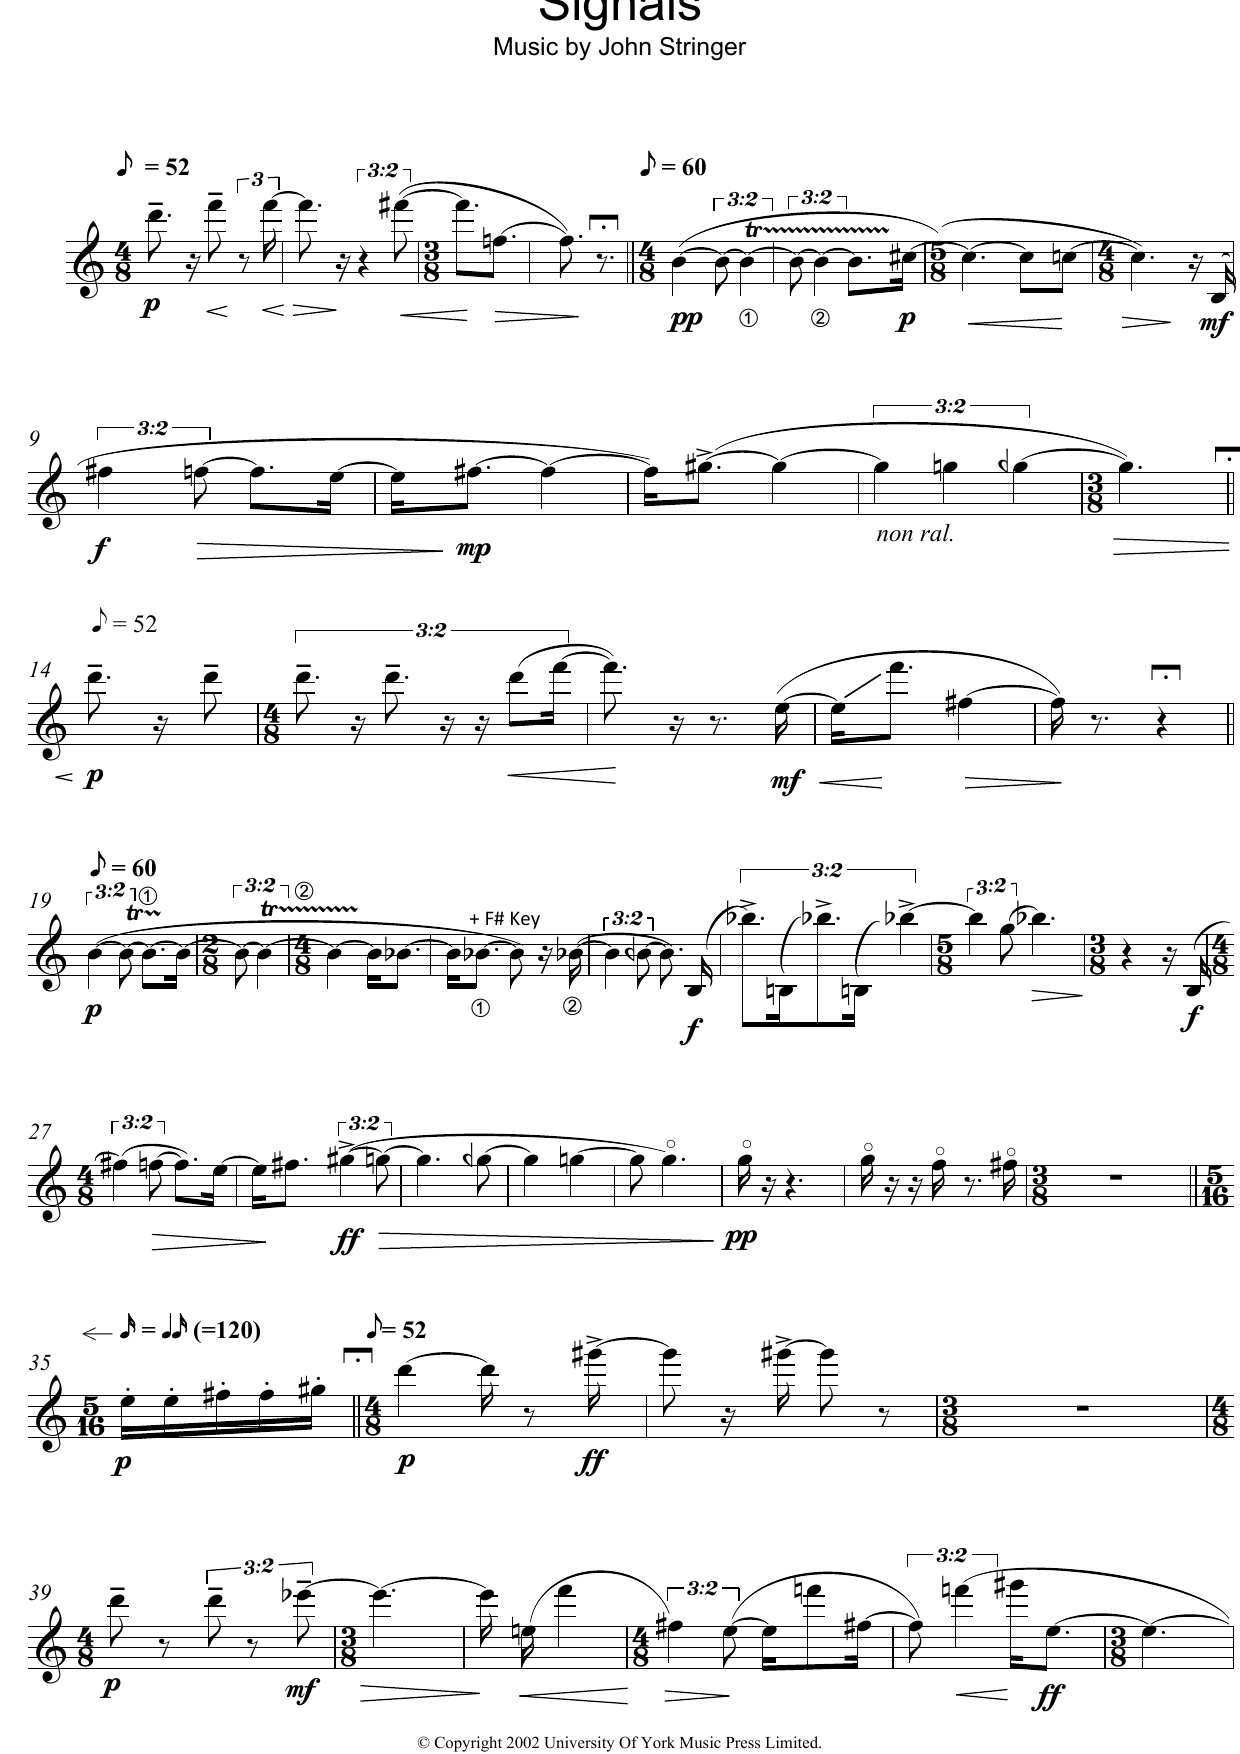 John Stringer Signals Sheet Music Notes & Chords for Oboe - Download or Print PDF